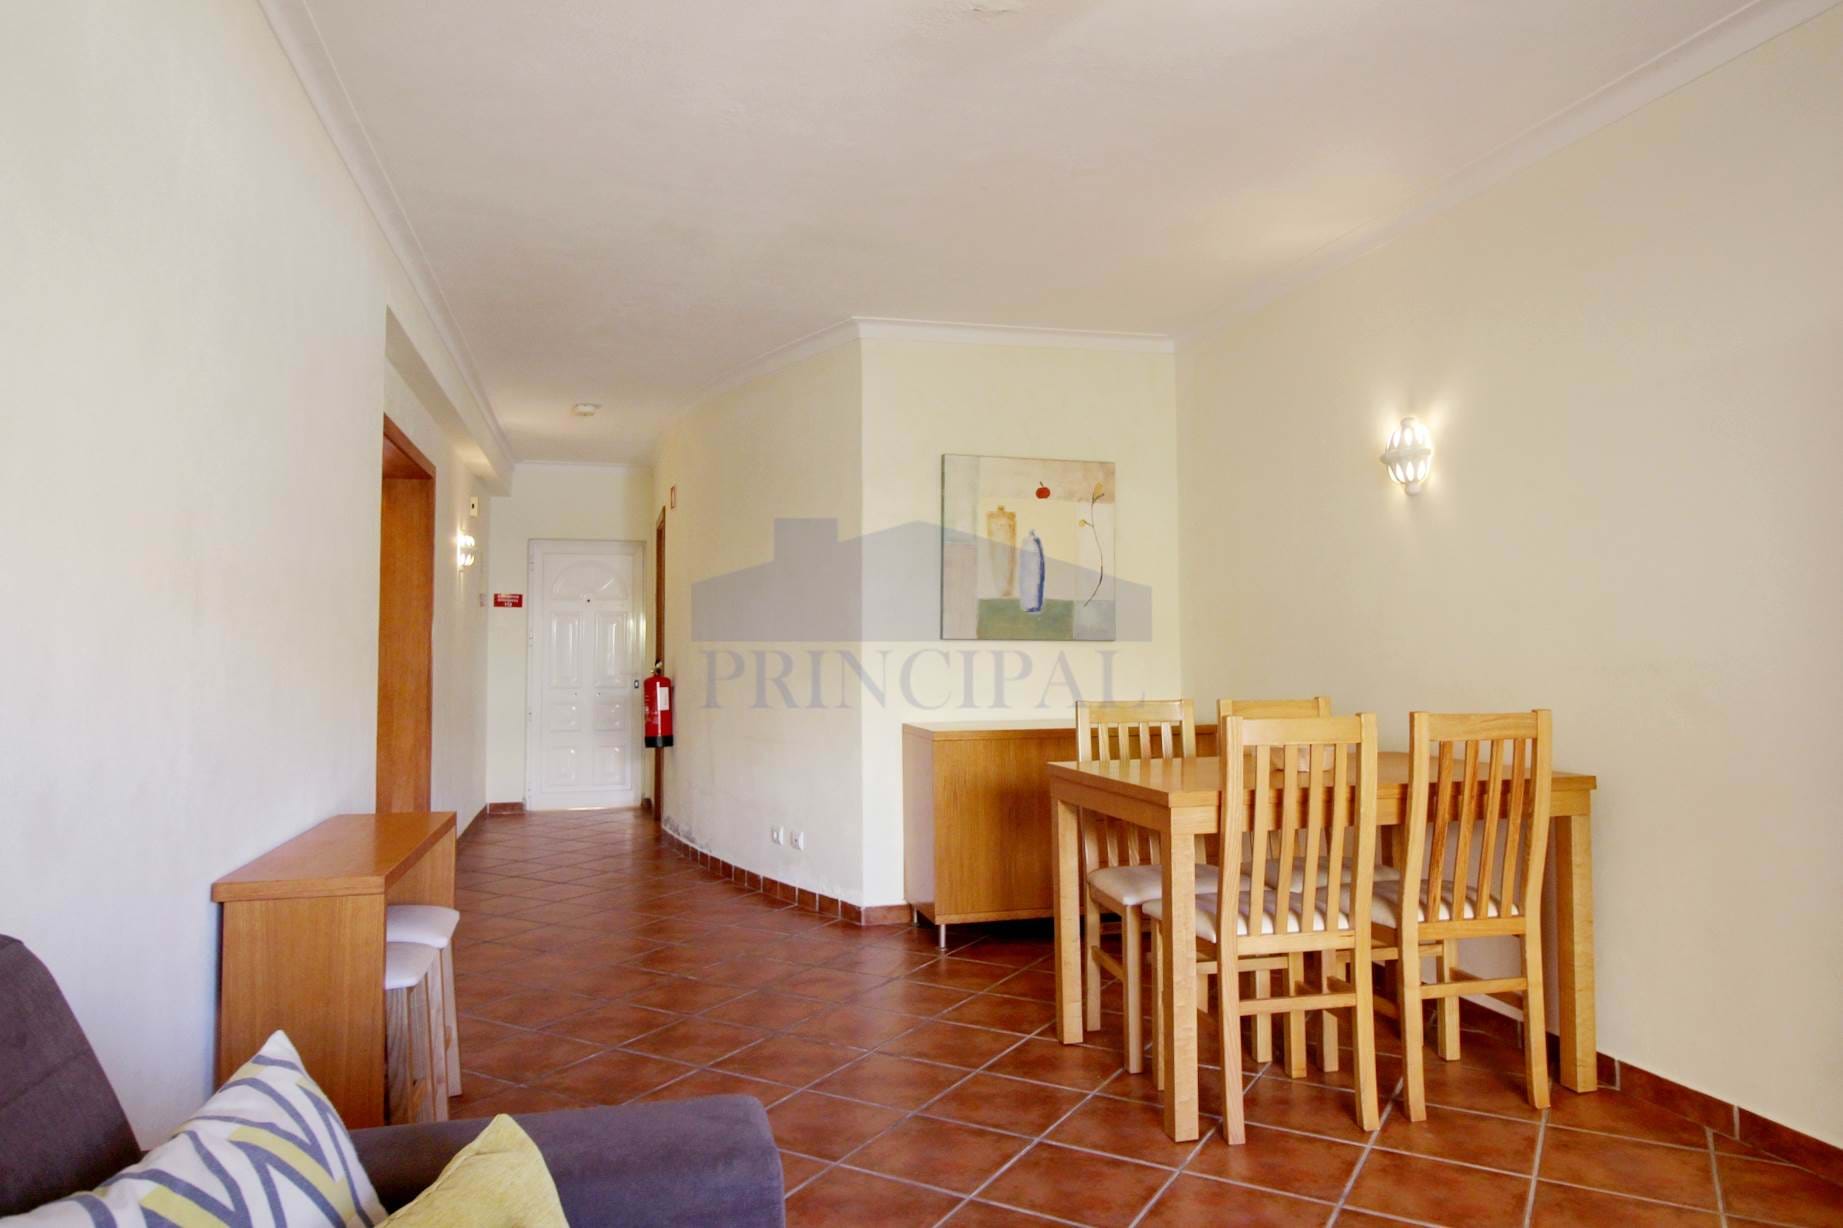 1 bedroom apartment in gated condominium with swimming pool in Vale Parra, Albufeira